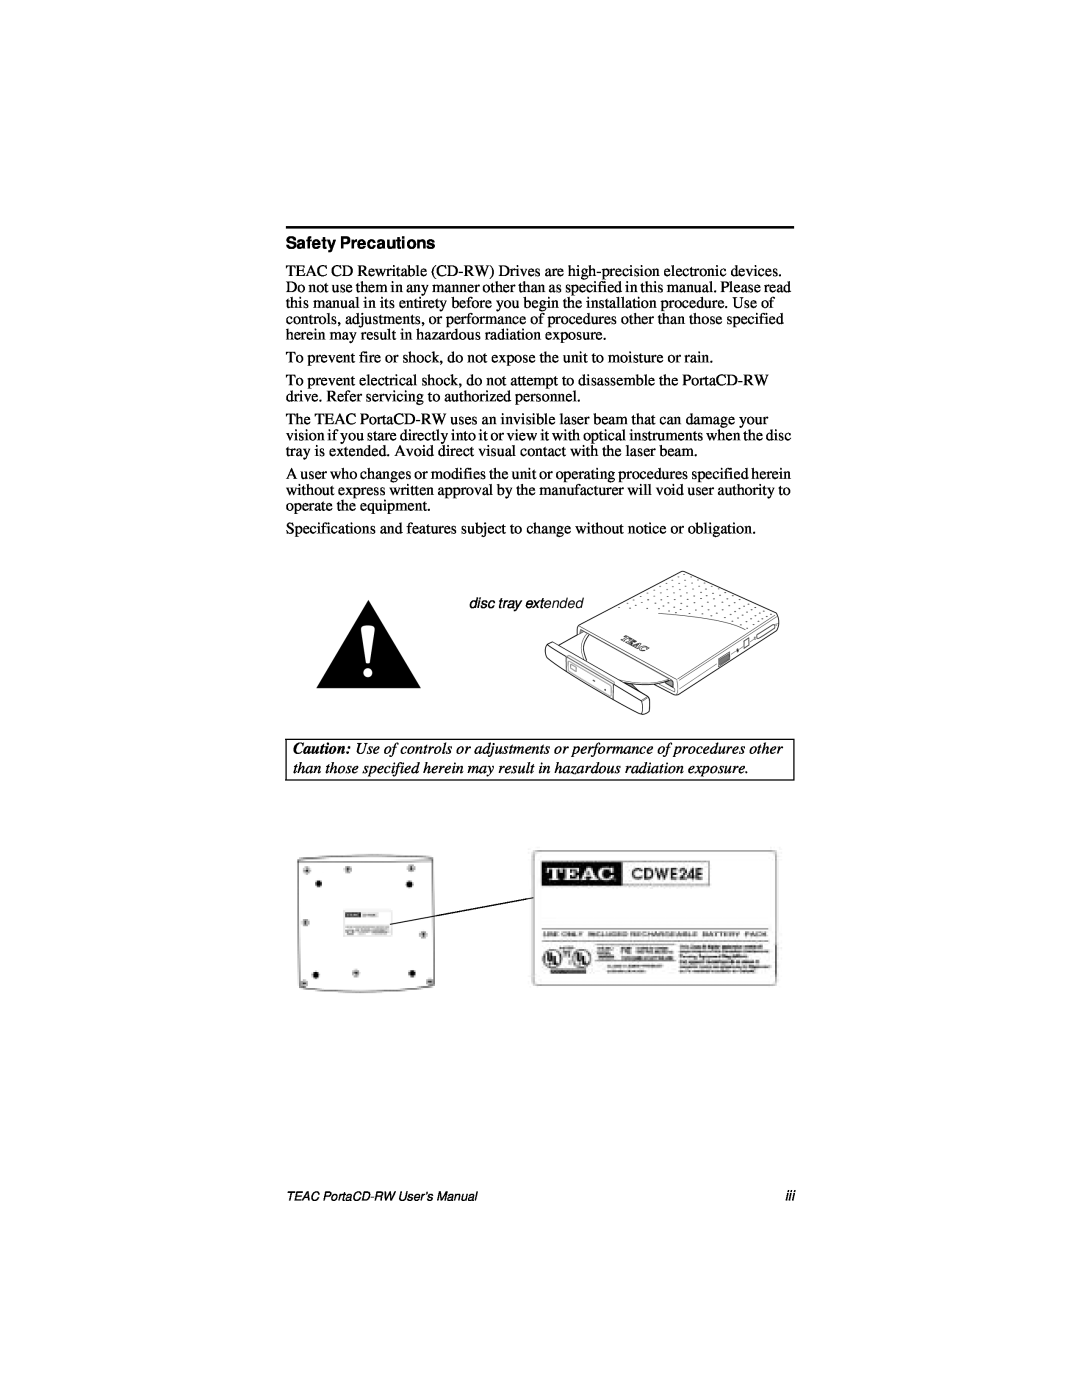 Teac E24E user manual Safety Precautions, disc tray extended 